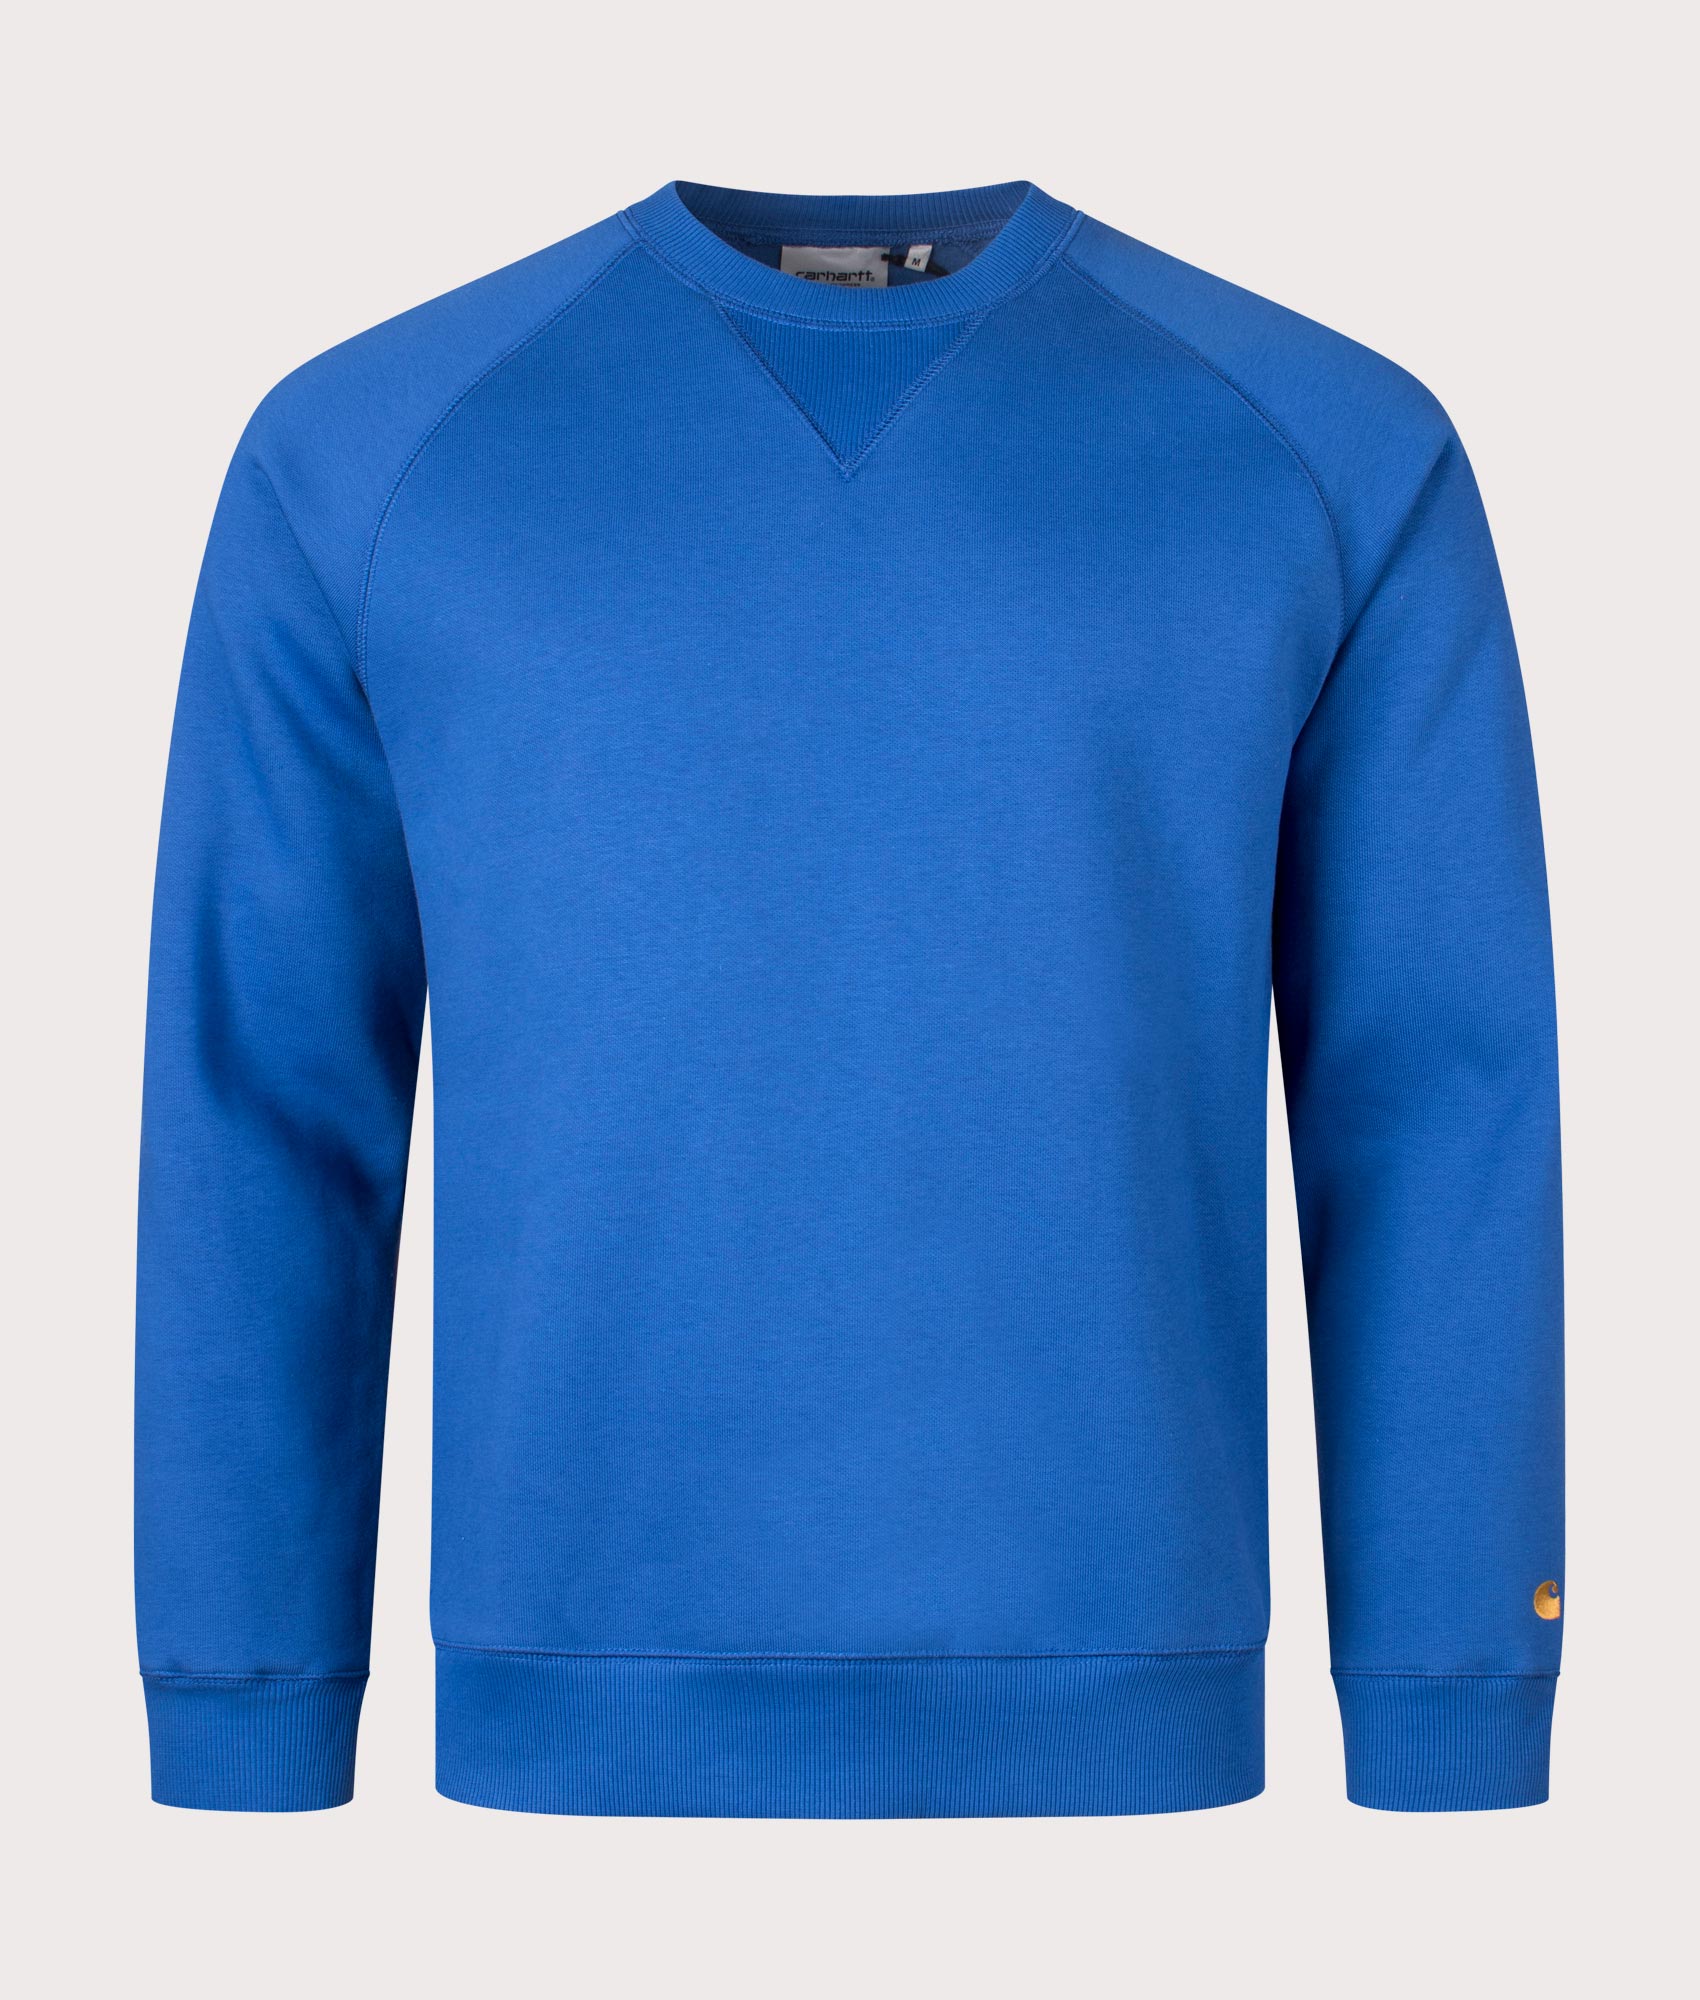 Carhartt WIP Mens Chase Sweatshirt - Colour: 22KXX Acapulco/Gold - Size: Medium